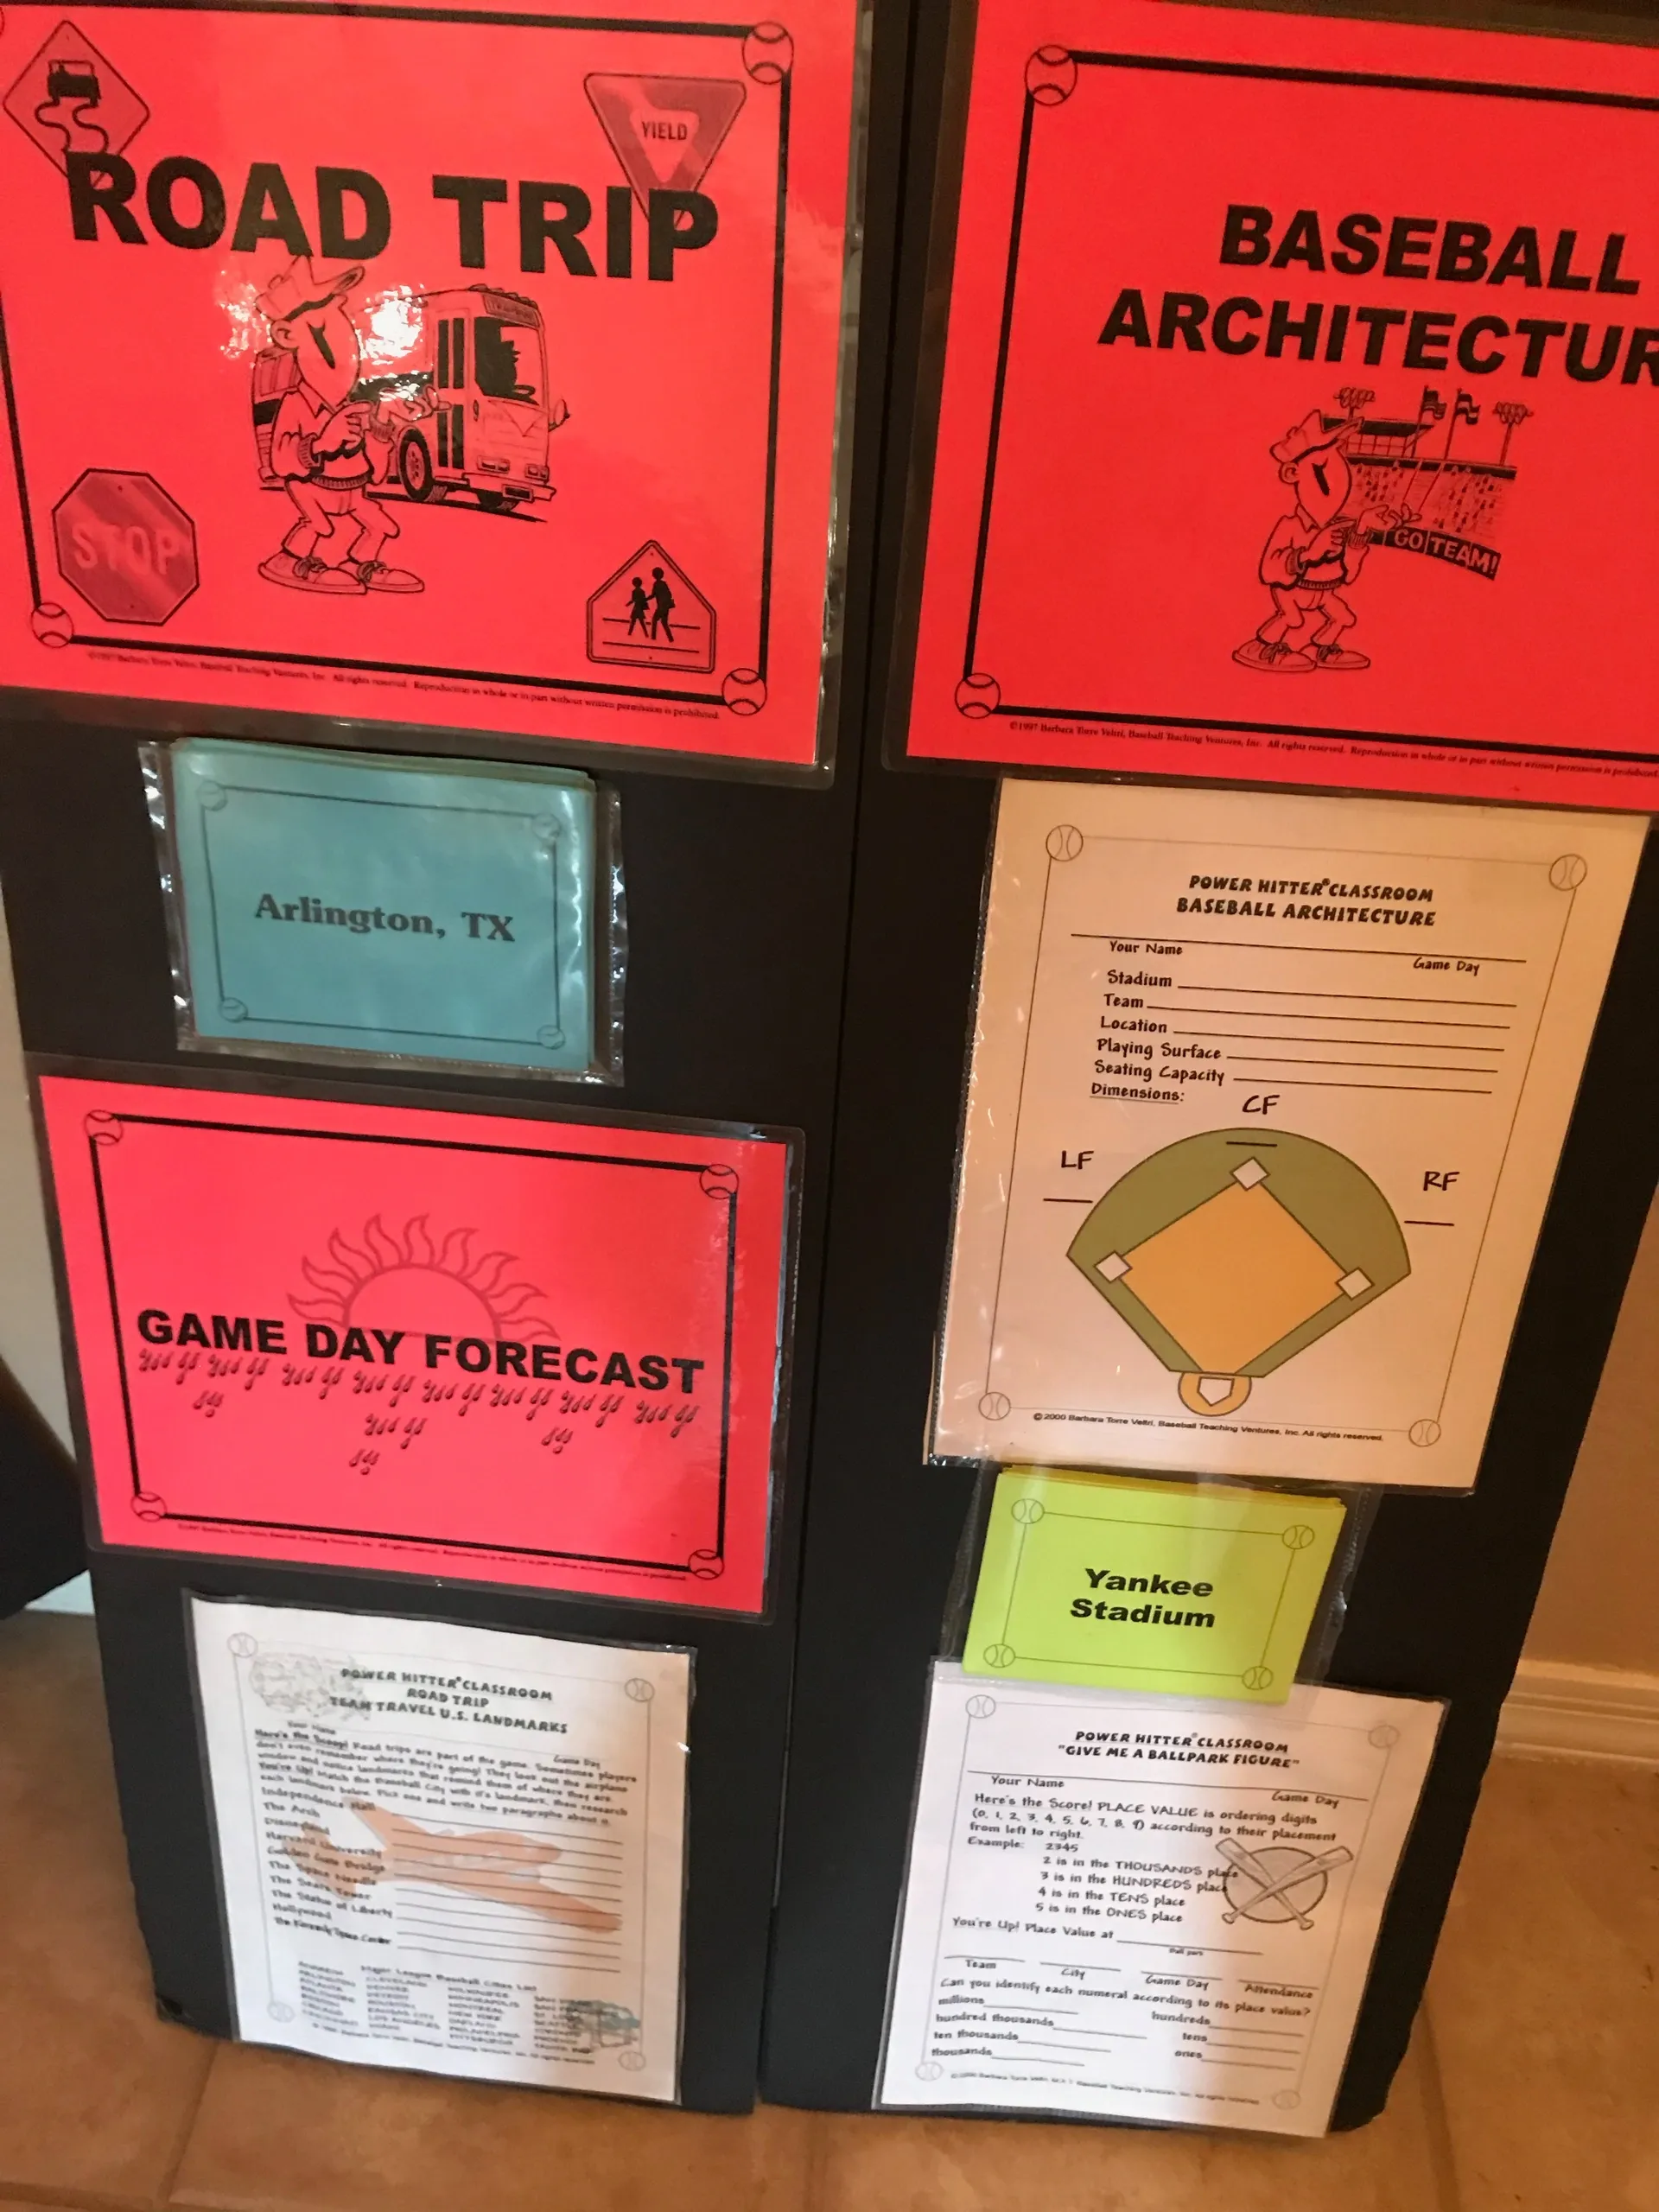 Baseball Classroom Curriculum - Teacher Program with Tote Bag